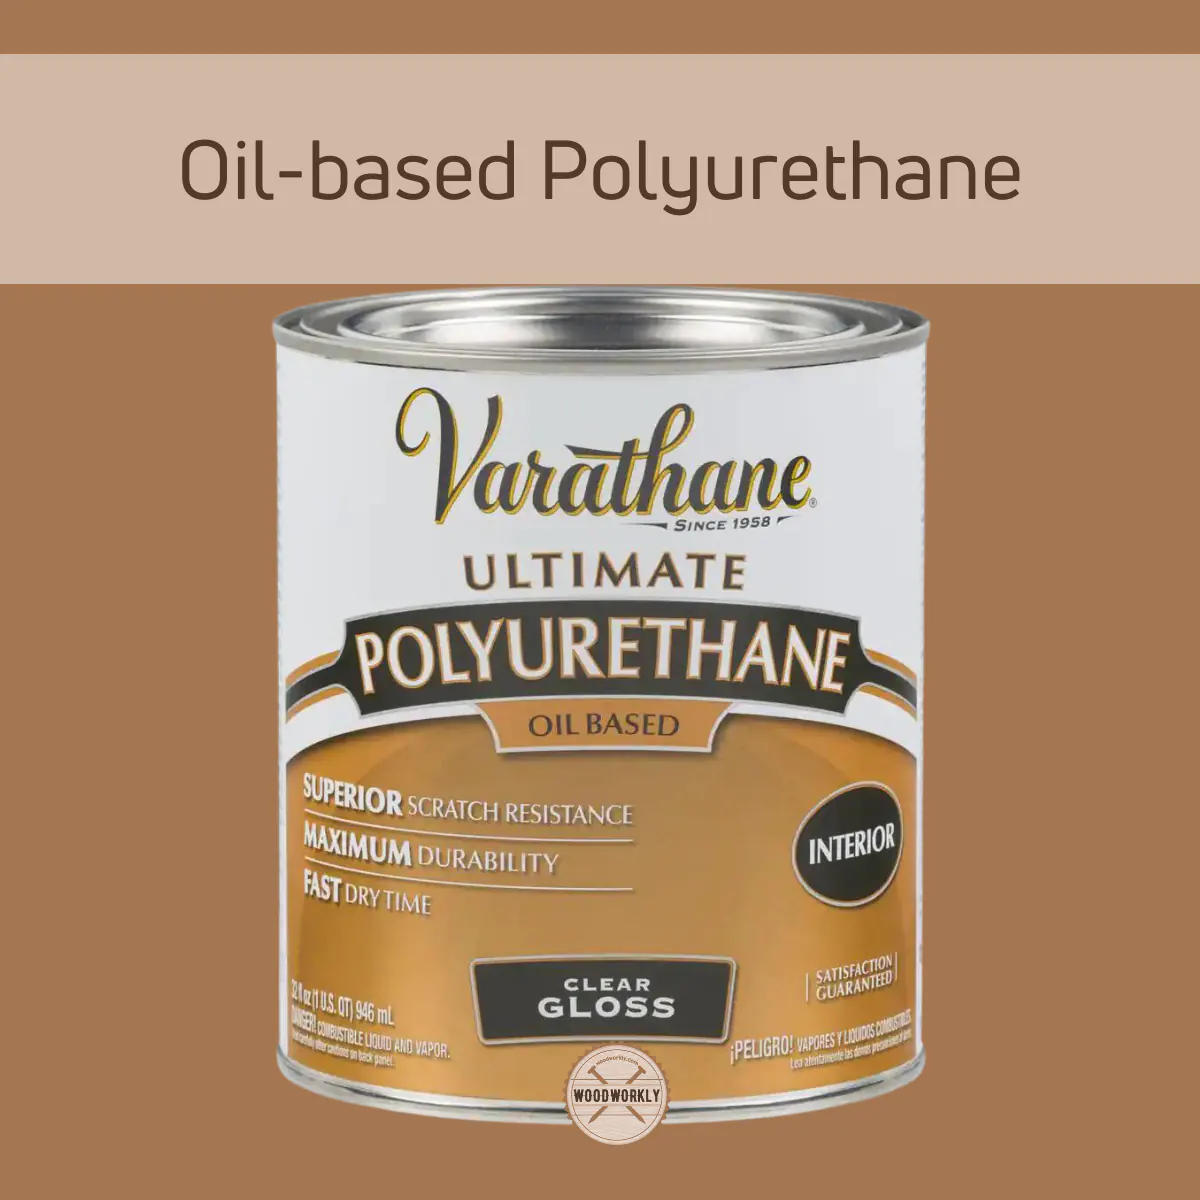 Oil-based Polyurethane